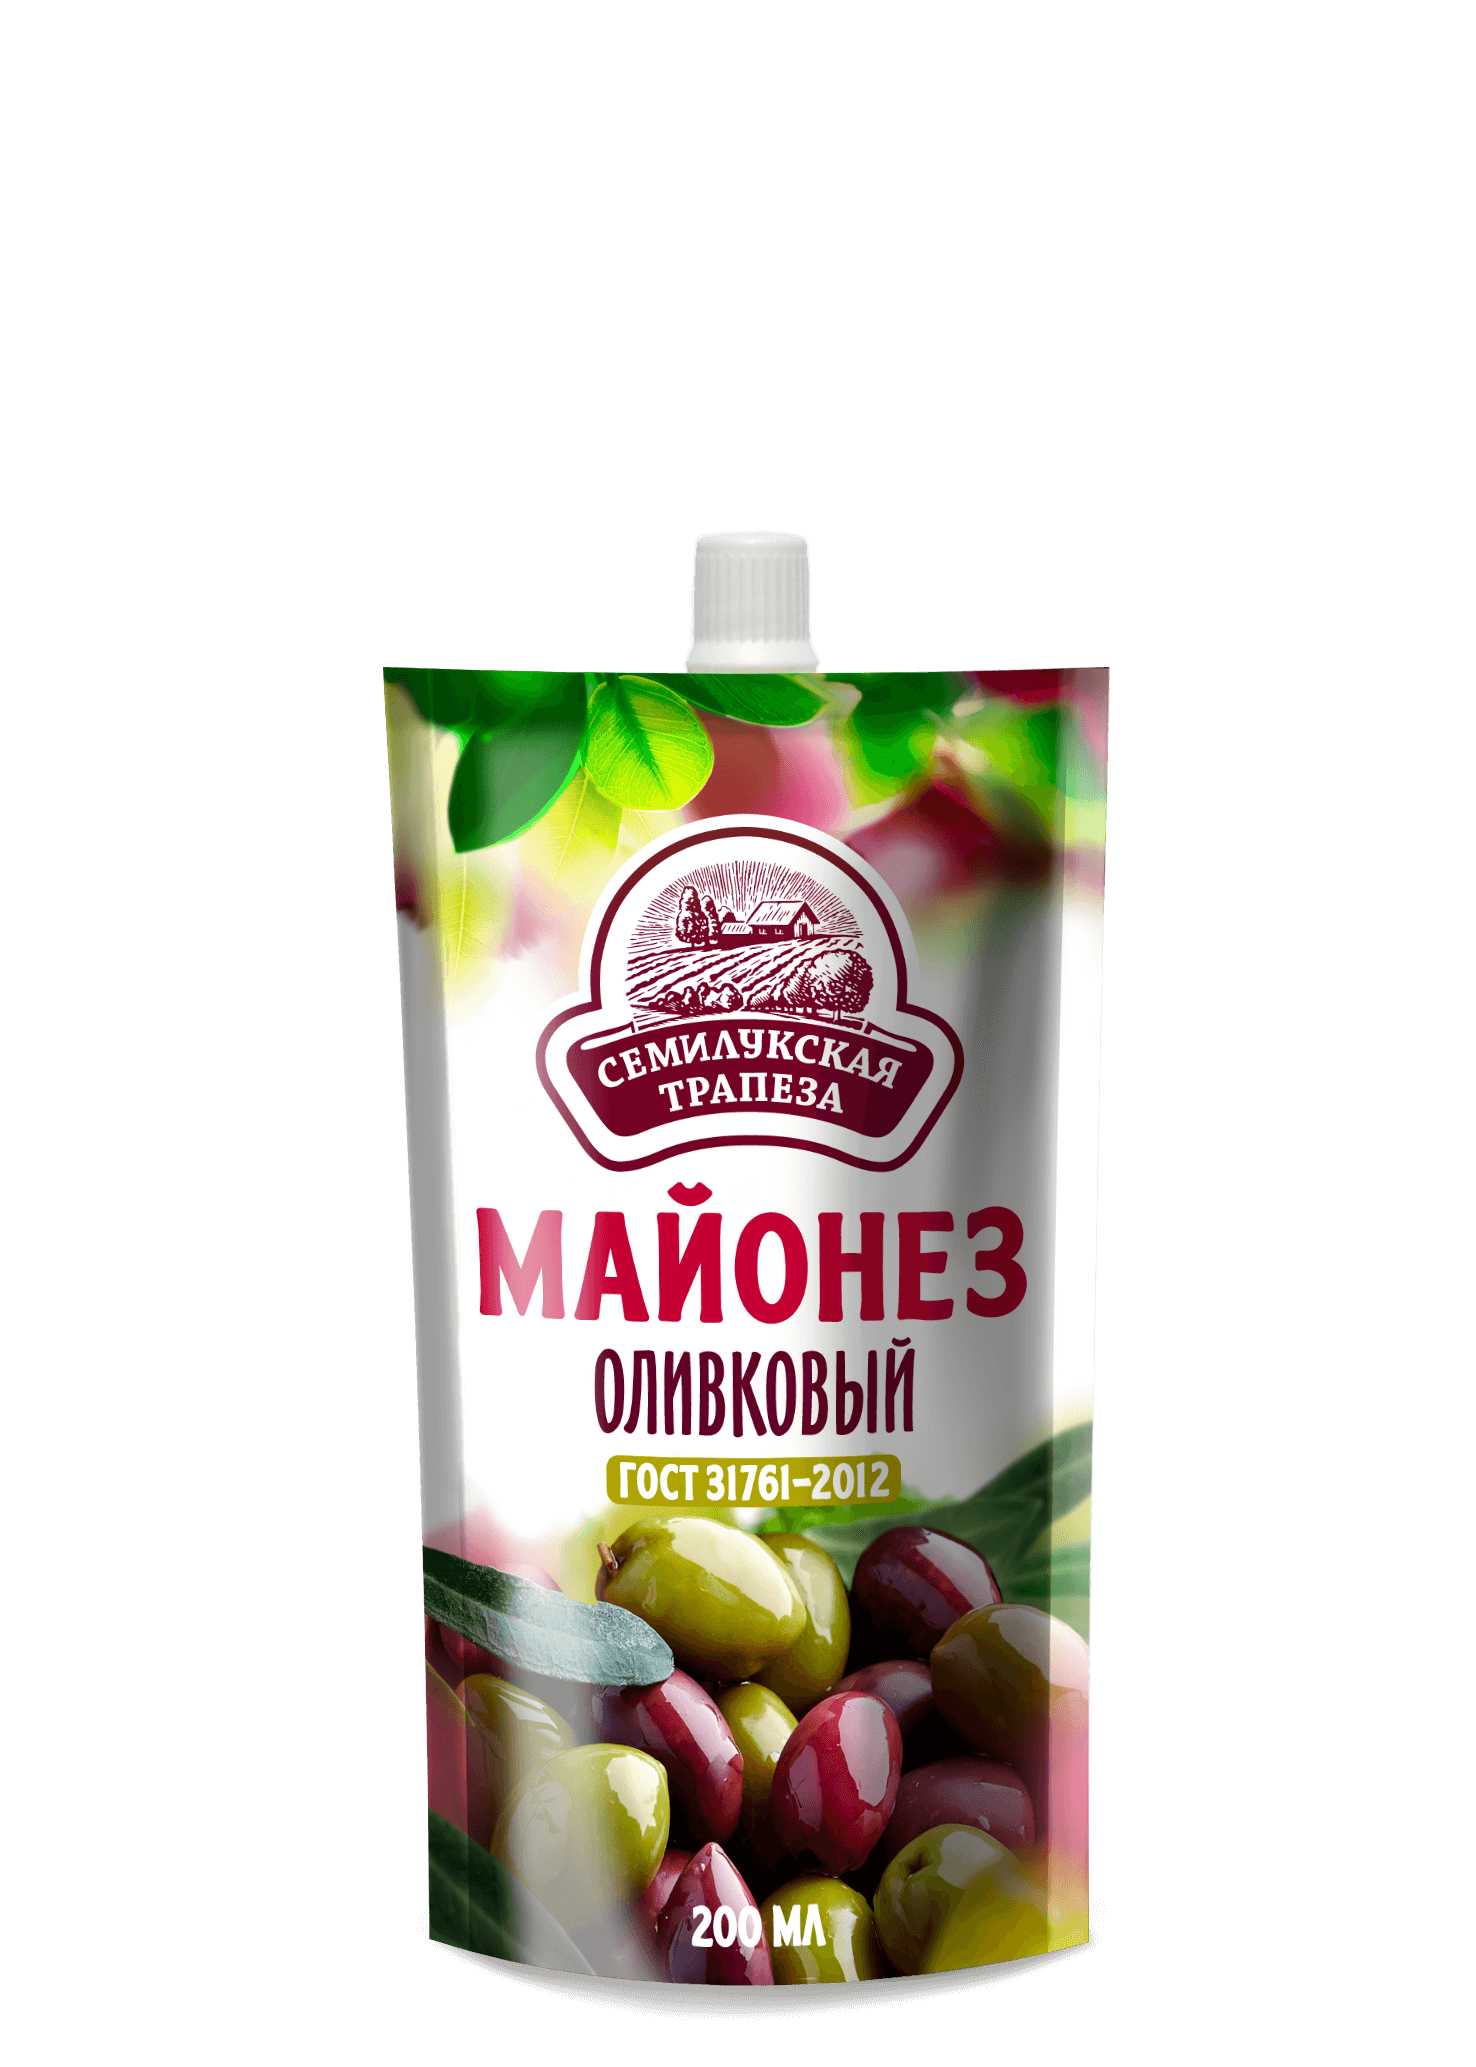 Mayonnaise "Semilyukskaya trapeza" Olive  200 ml